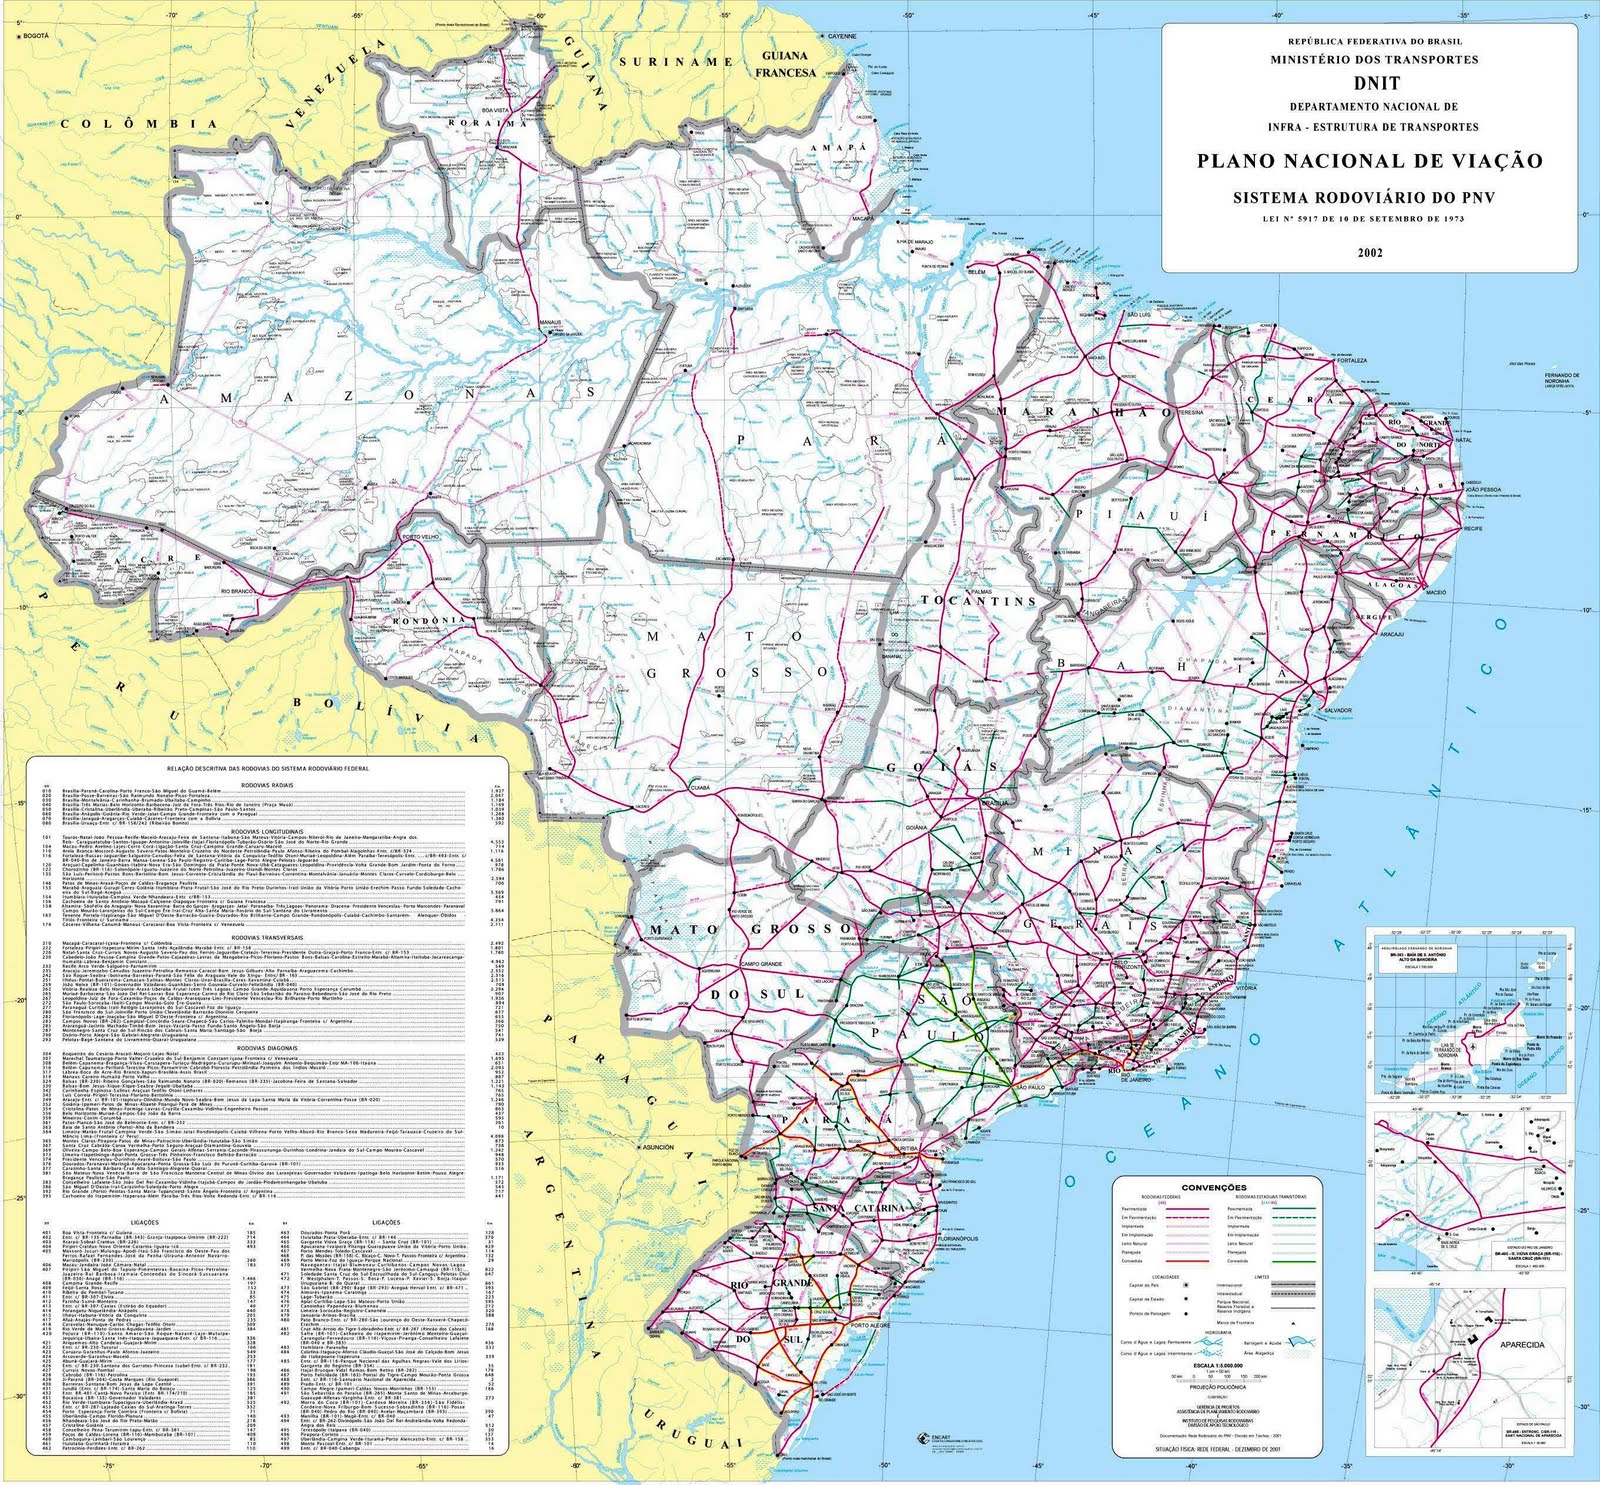 PZ C: mapa do brasil